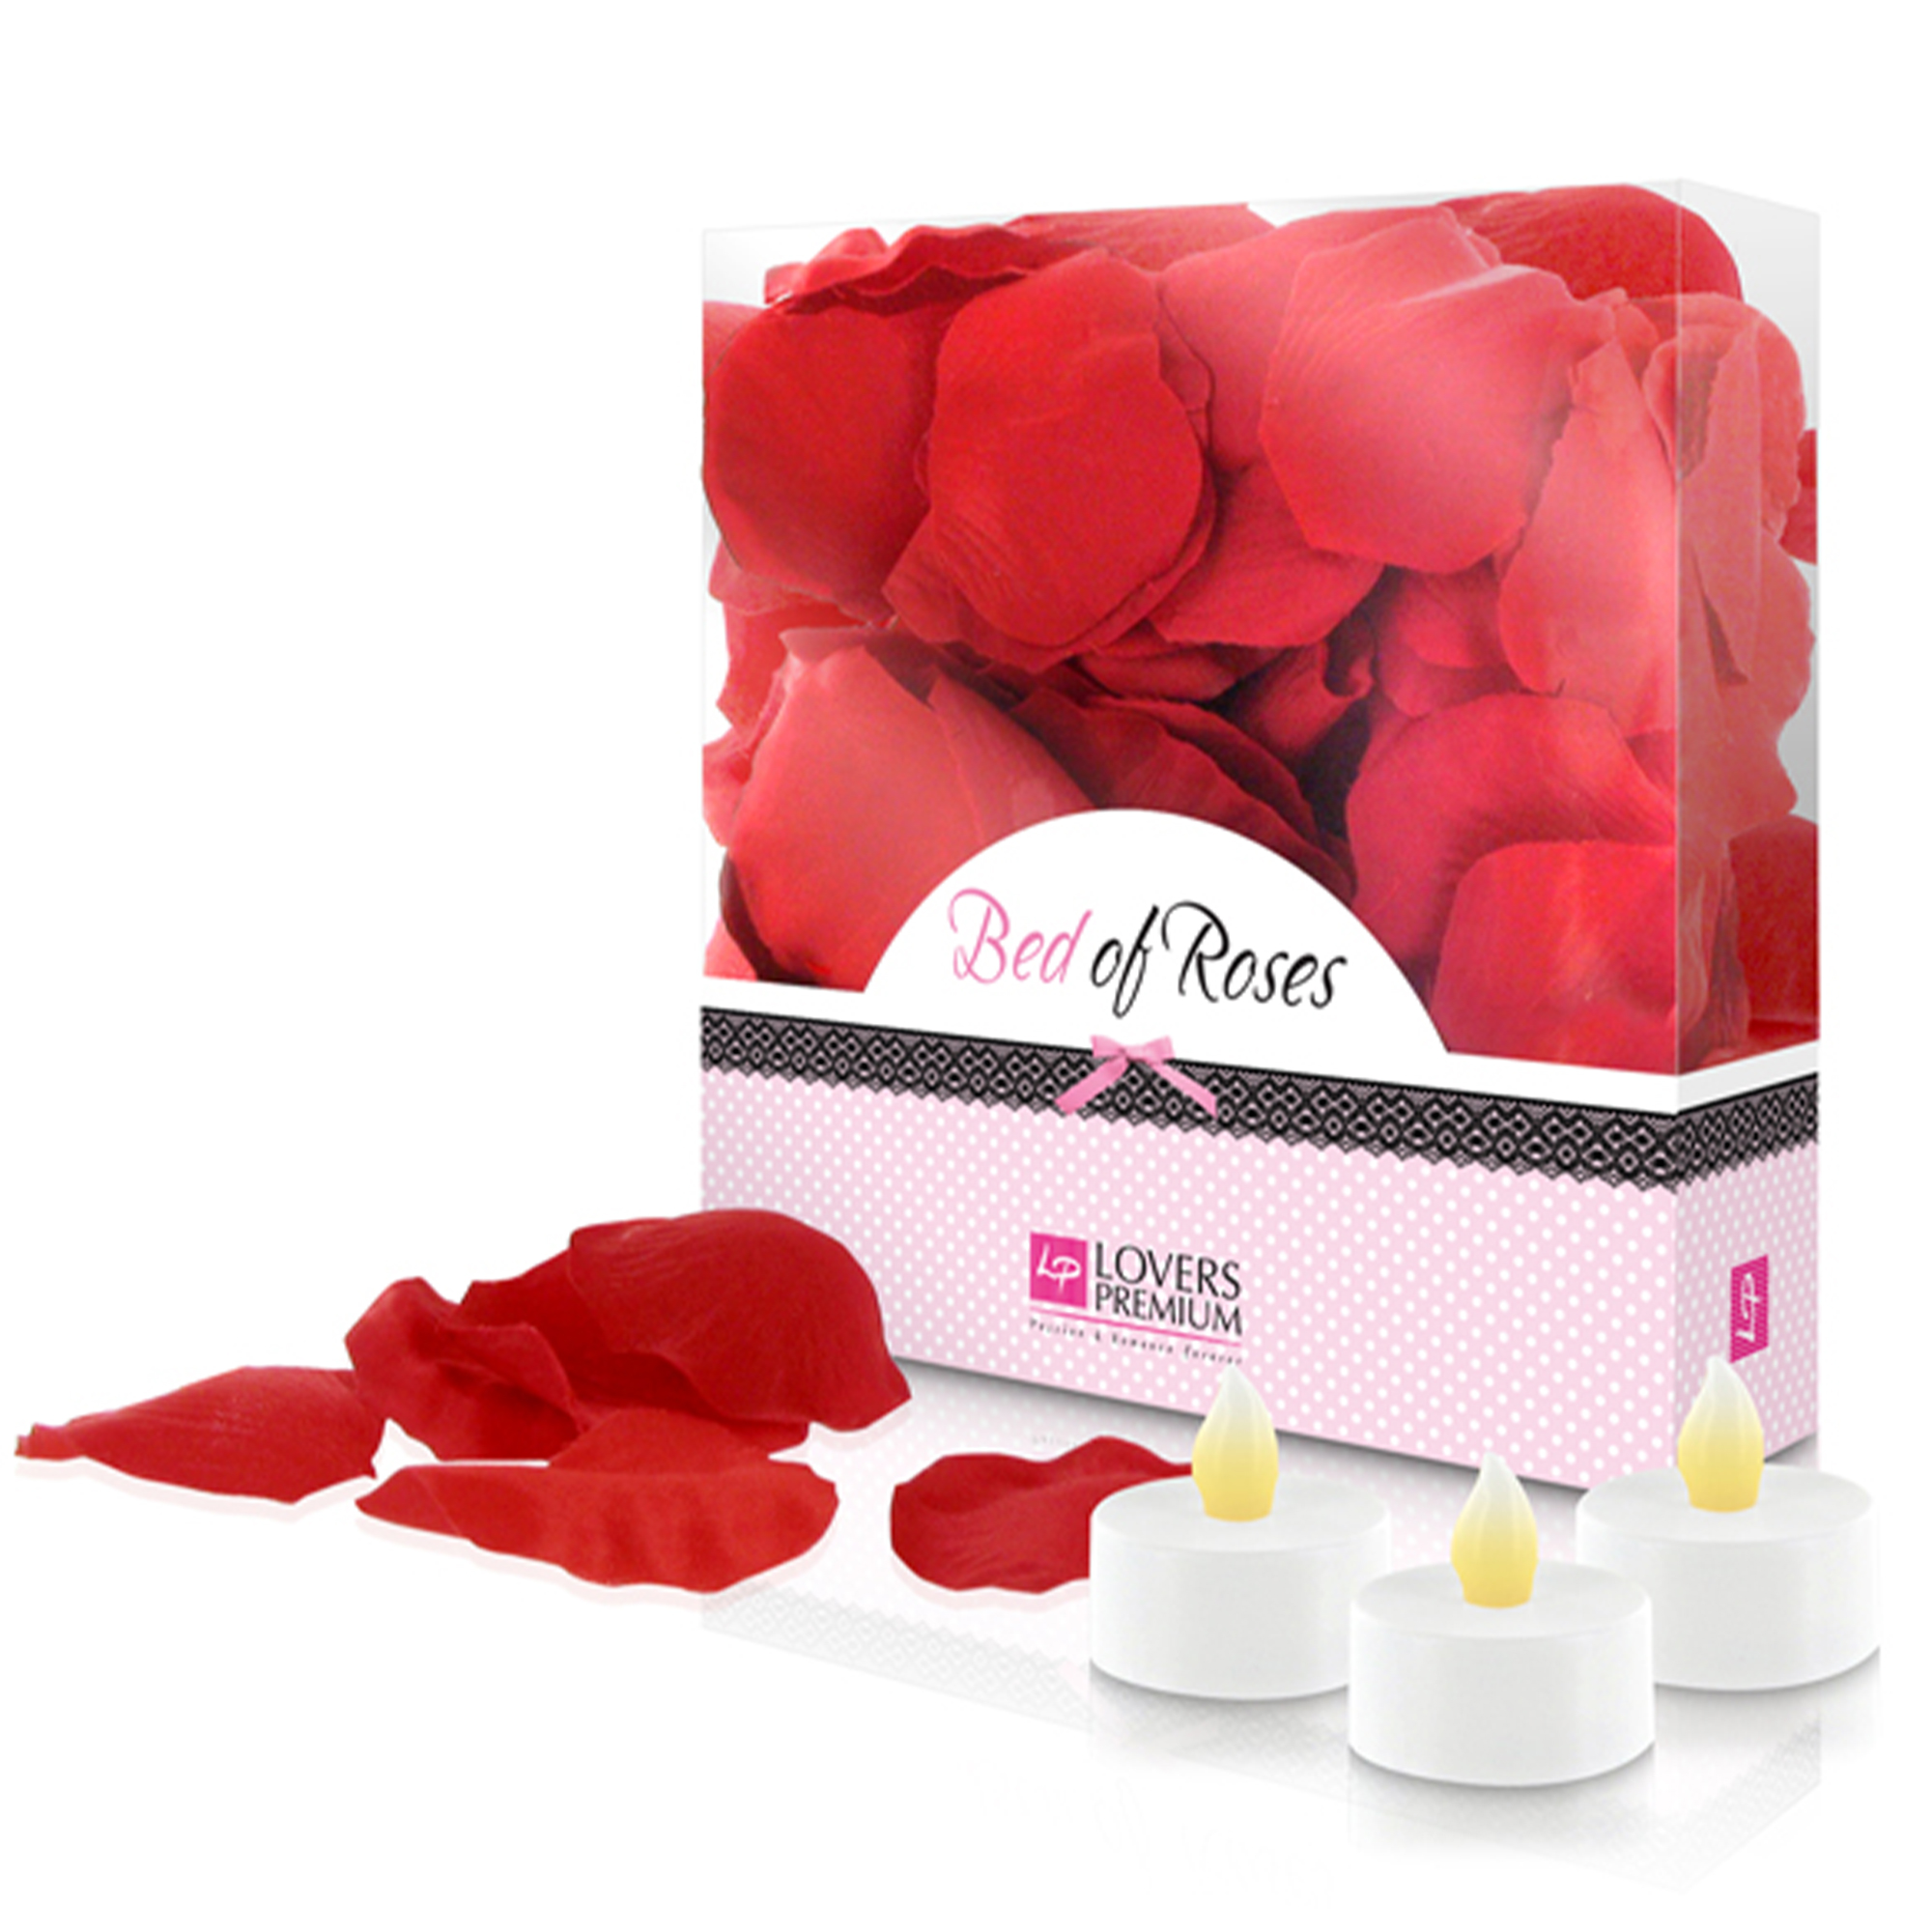 Loverspremium Bed Of Roses Rose Petals Red